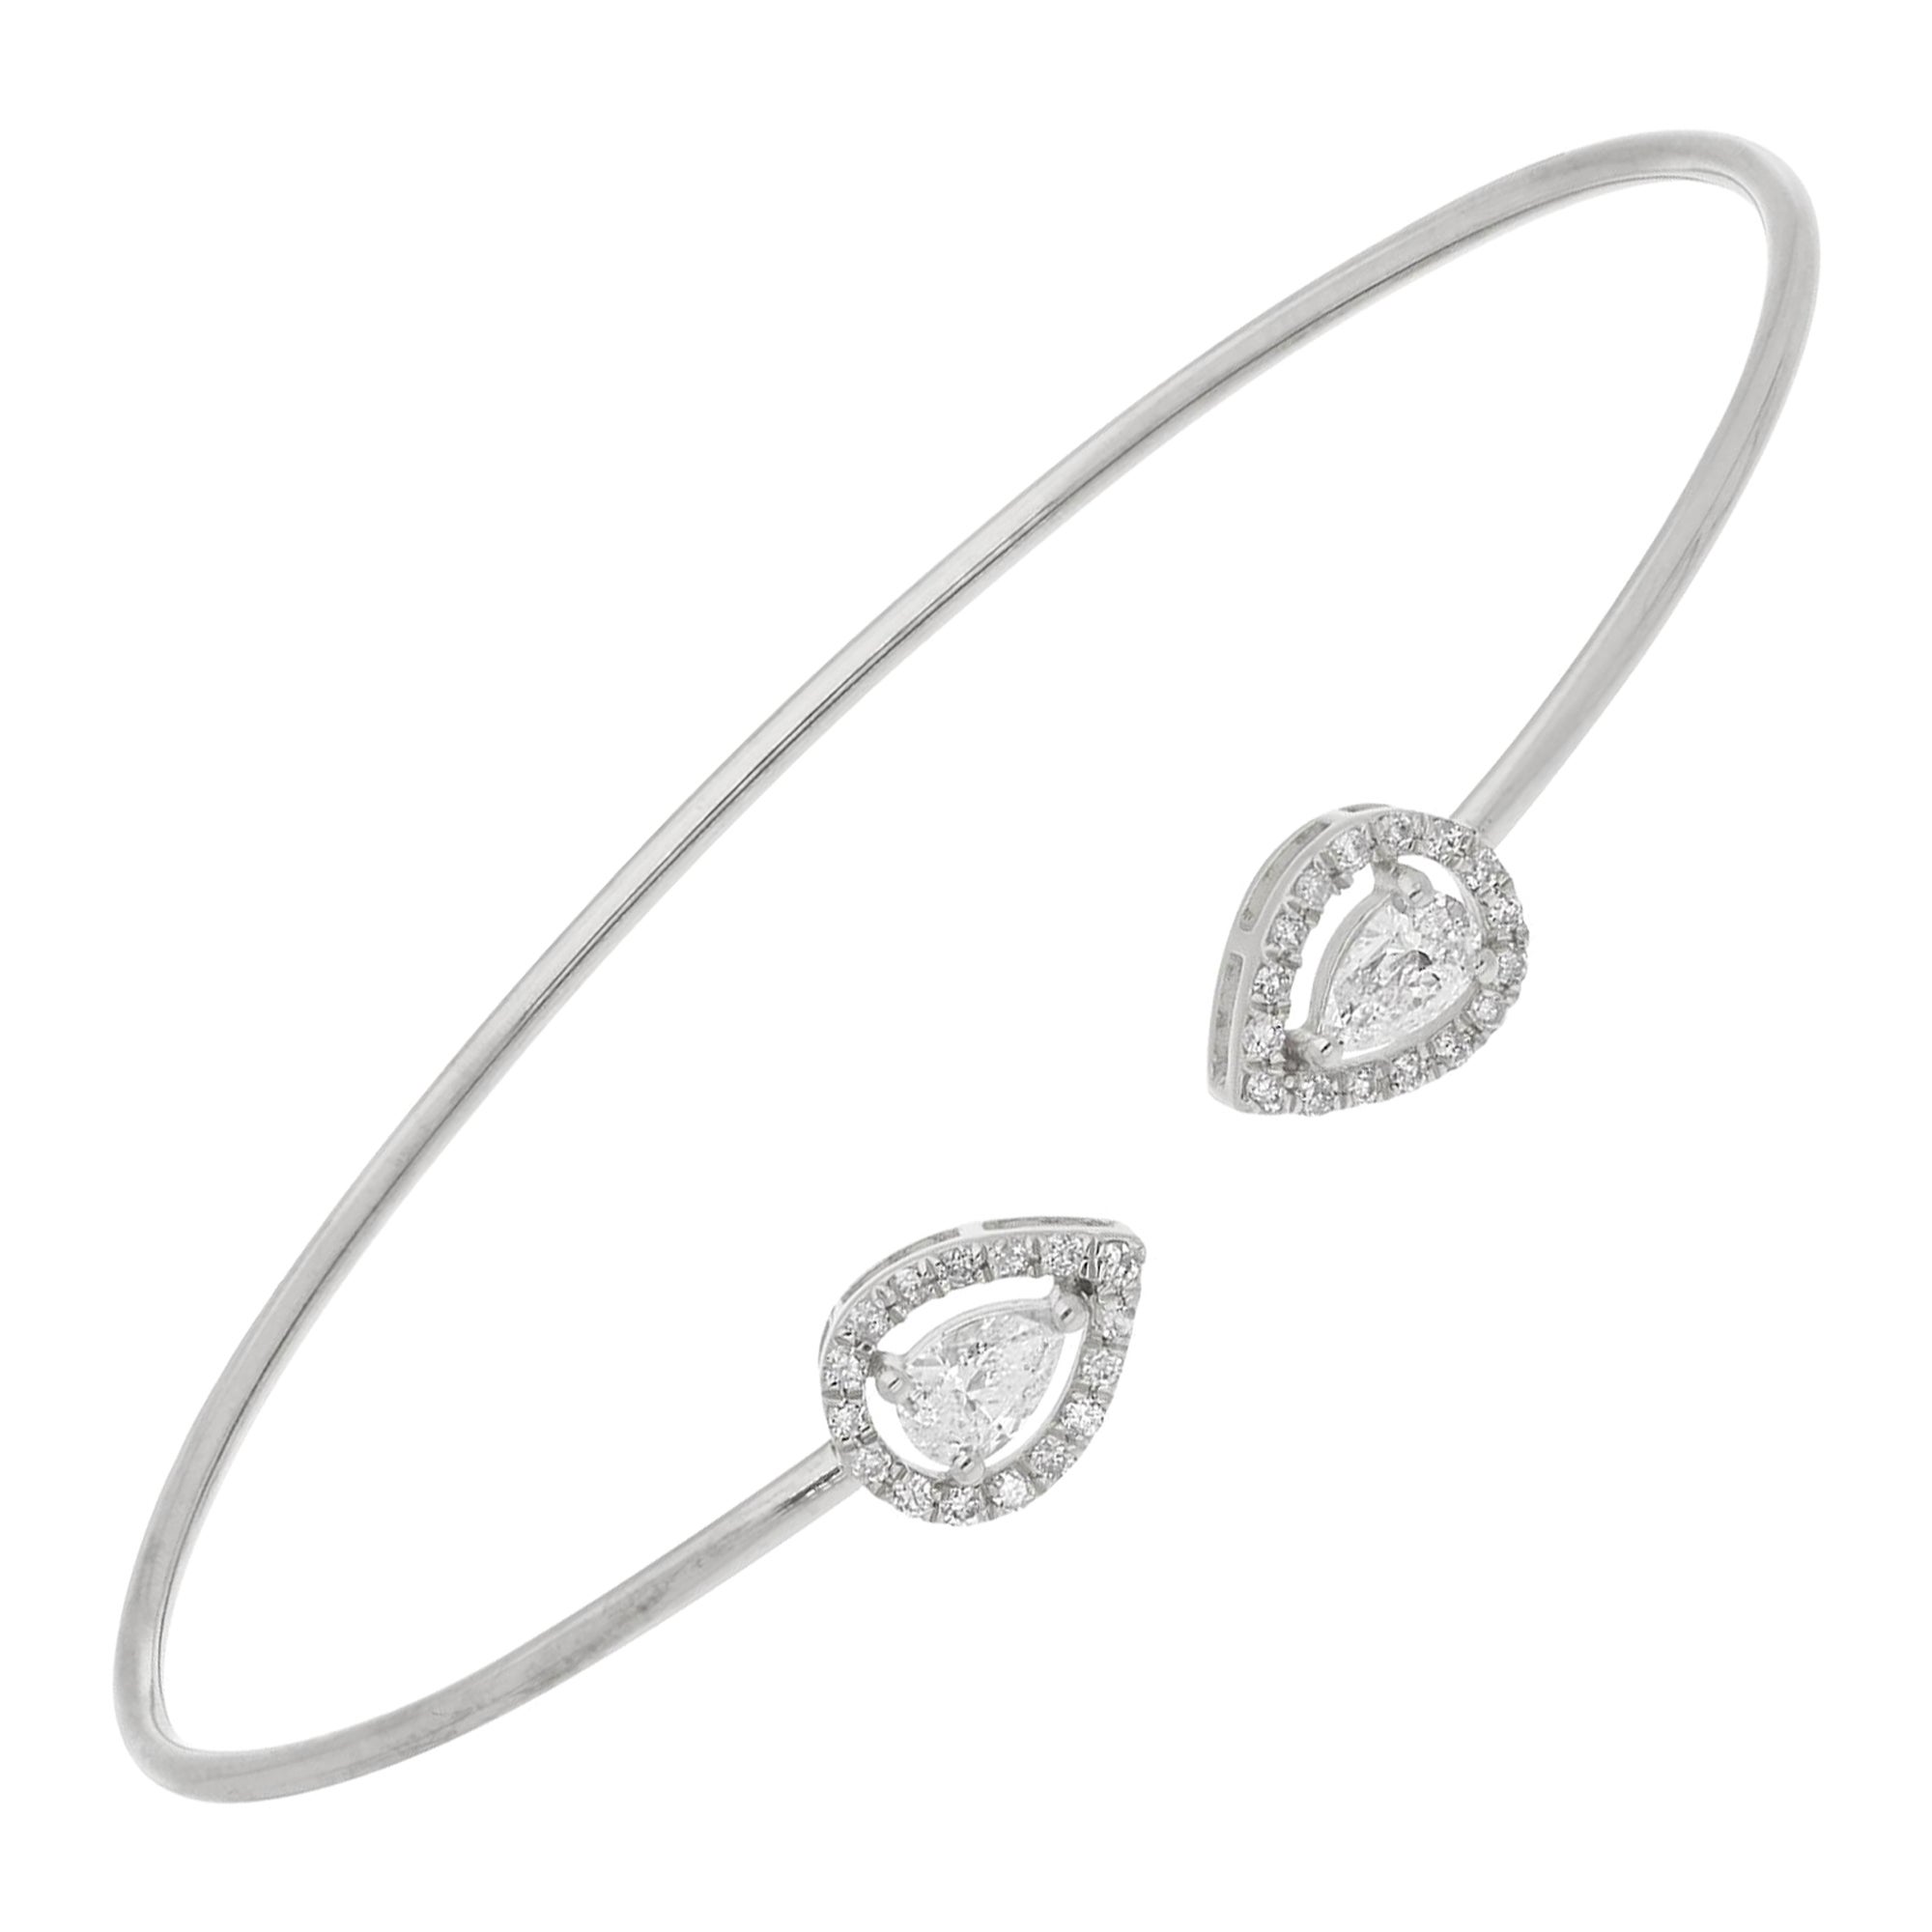 Pear & Round Diamond Cuff Bangle Bracelet 18 Karat White Gold Handmade Jewelry